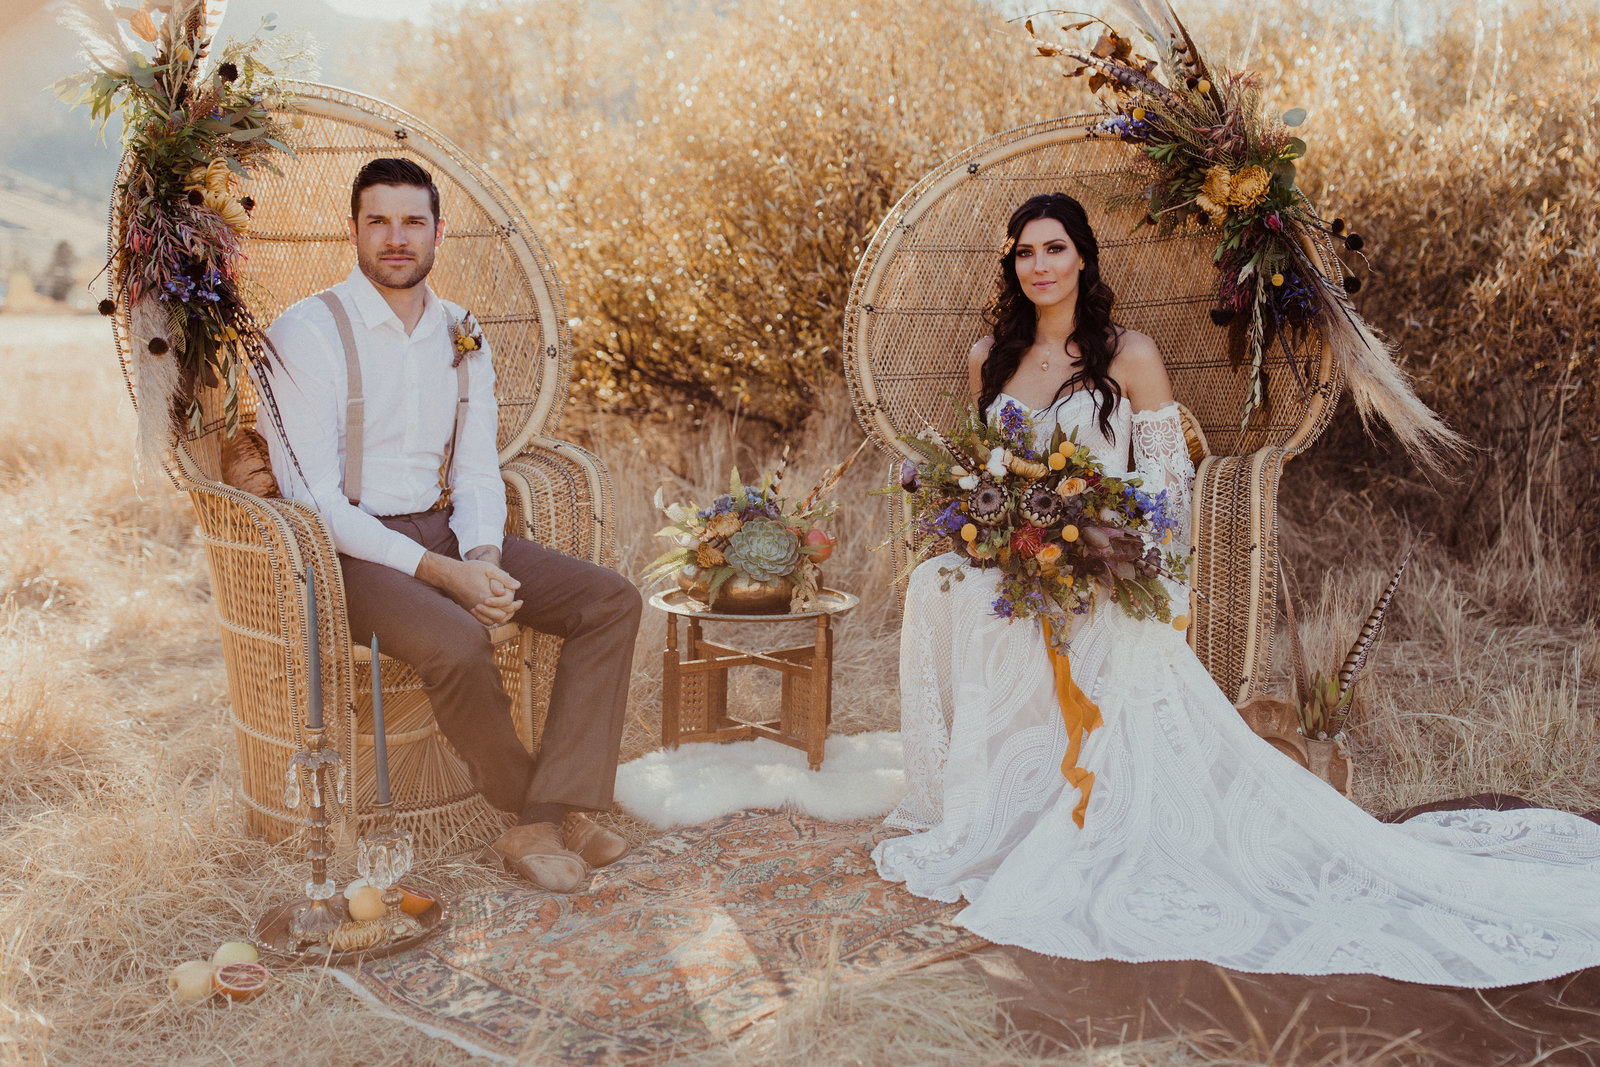 Becca Kufrin & Garrett Yrigoyen Wedding  Bohemian Styled Shoot